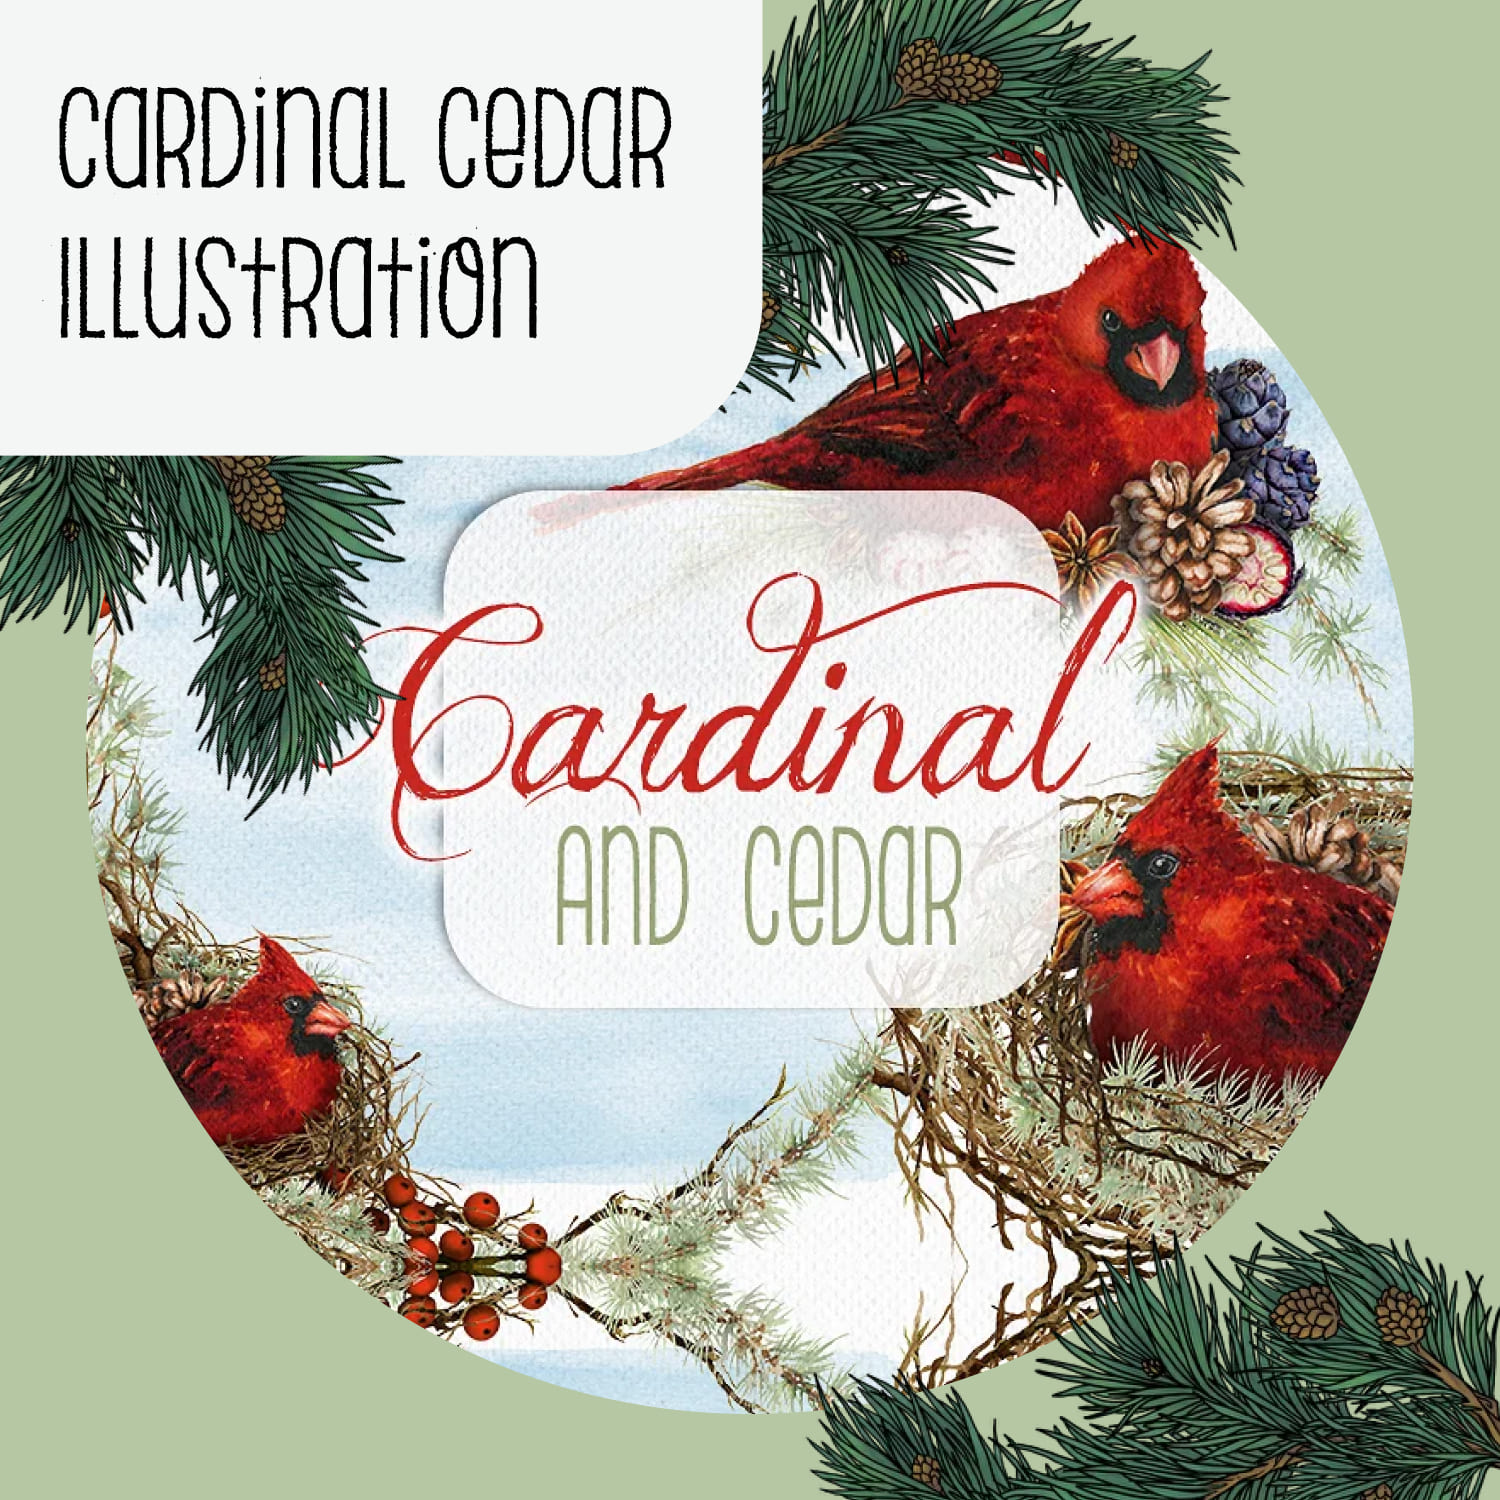 Cardinal Cedar Illustration.